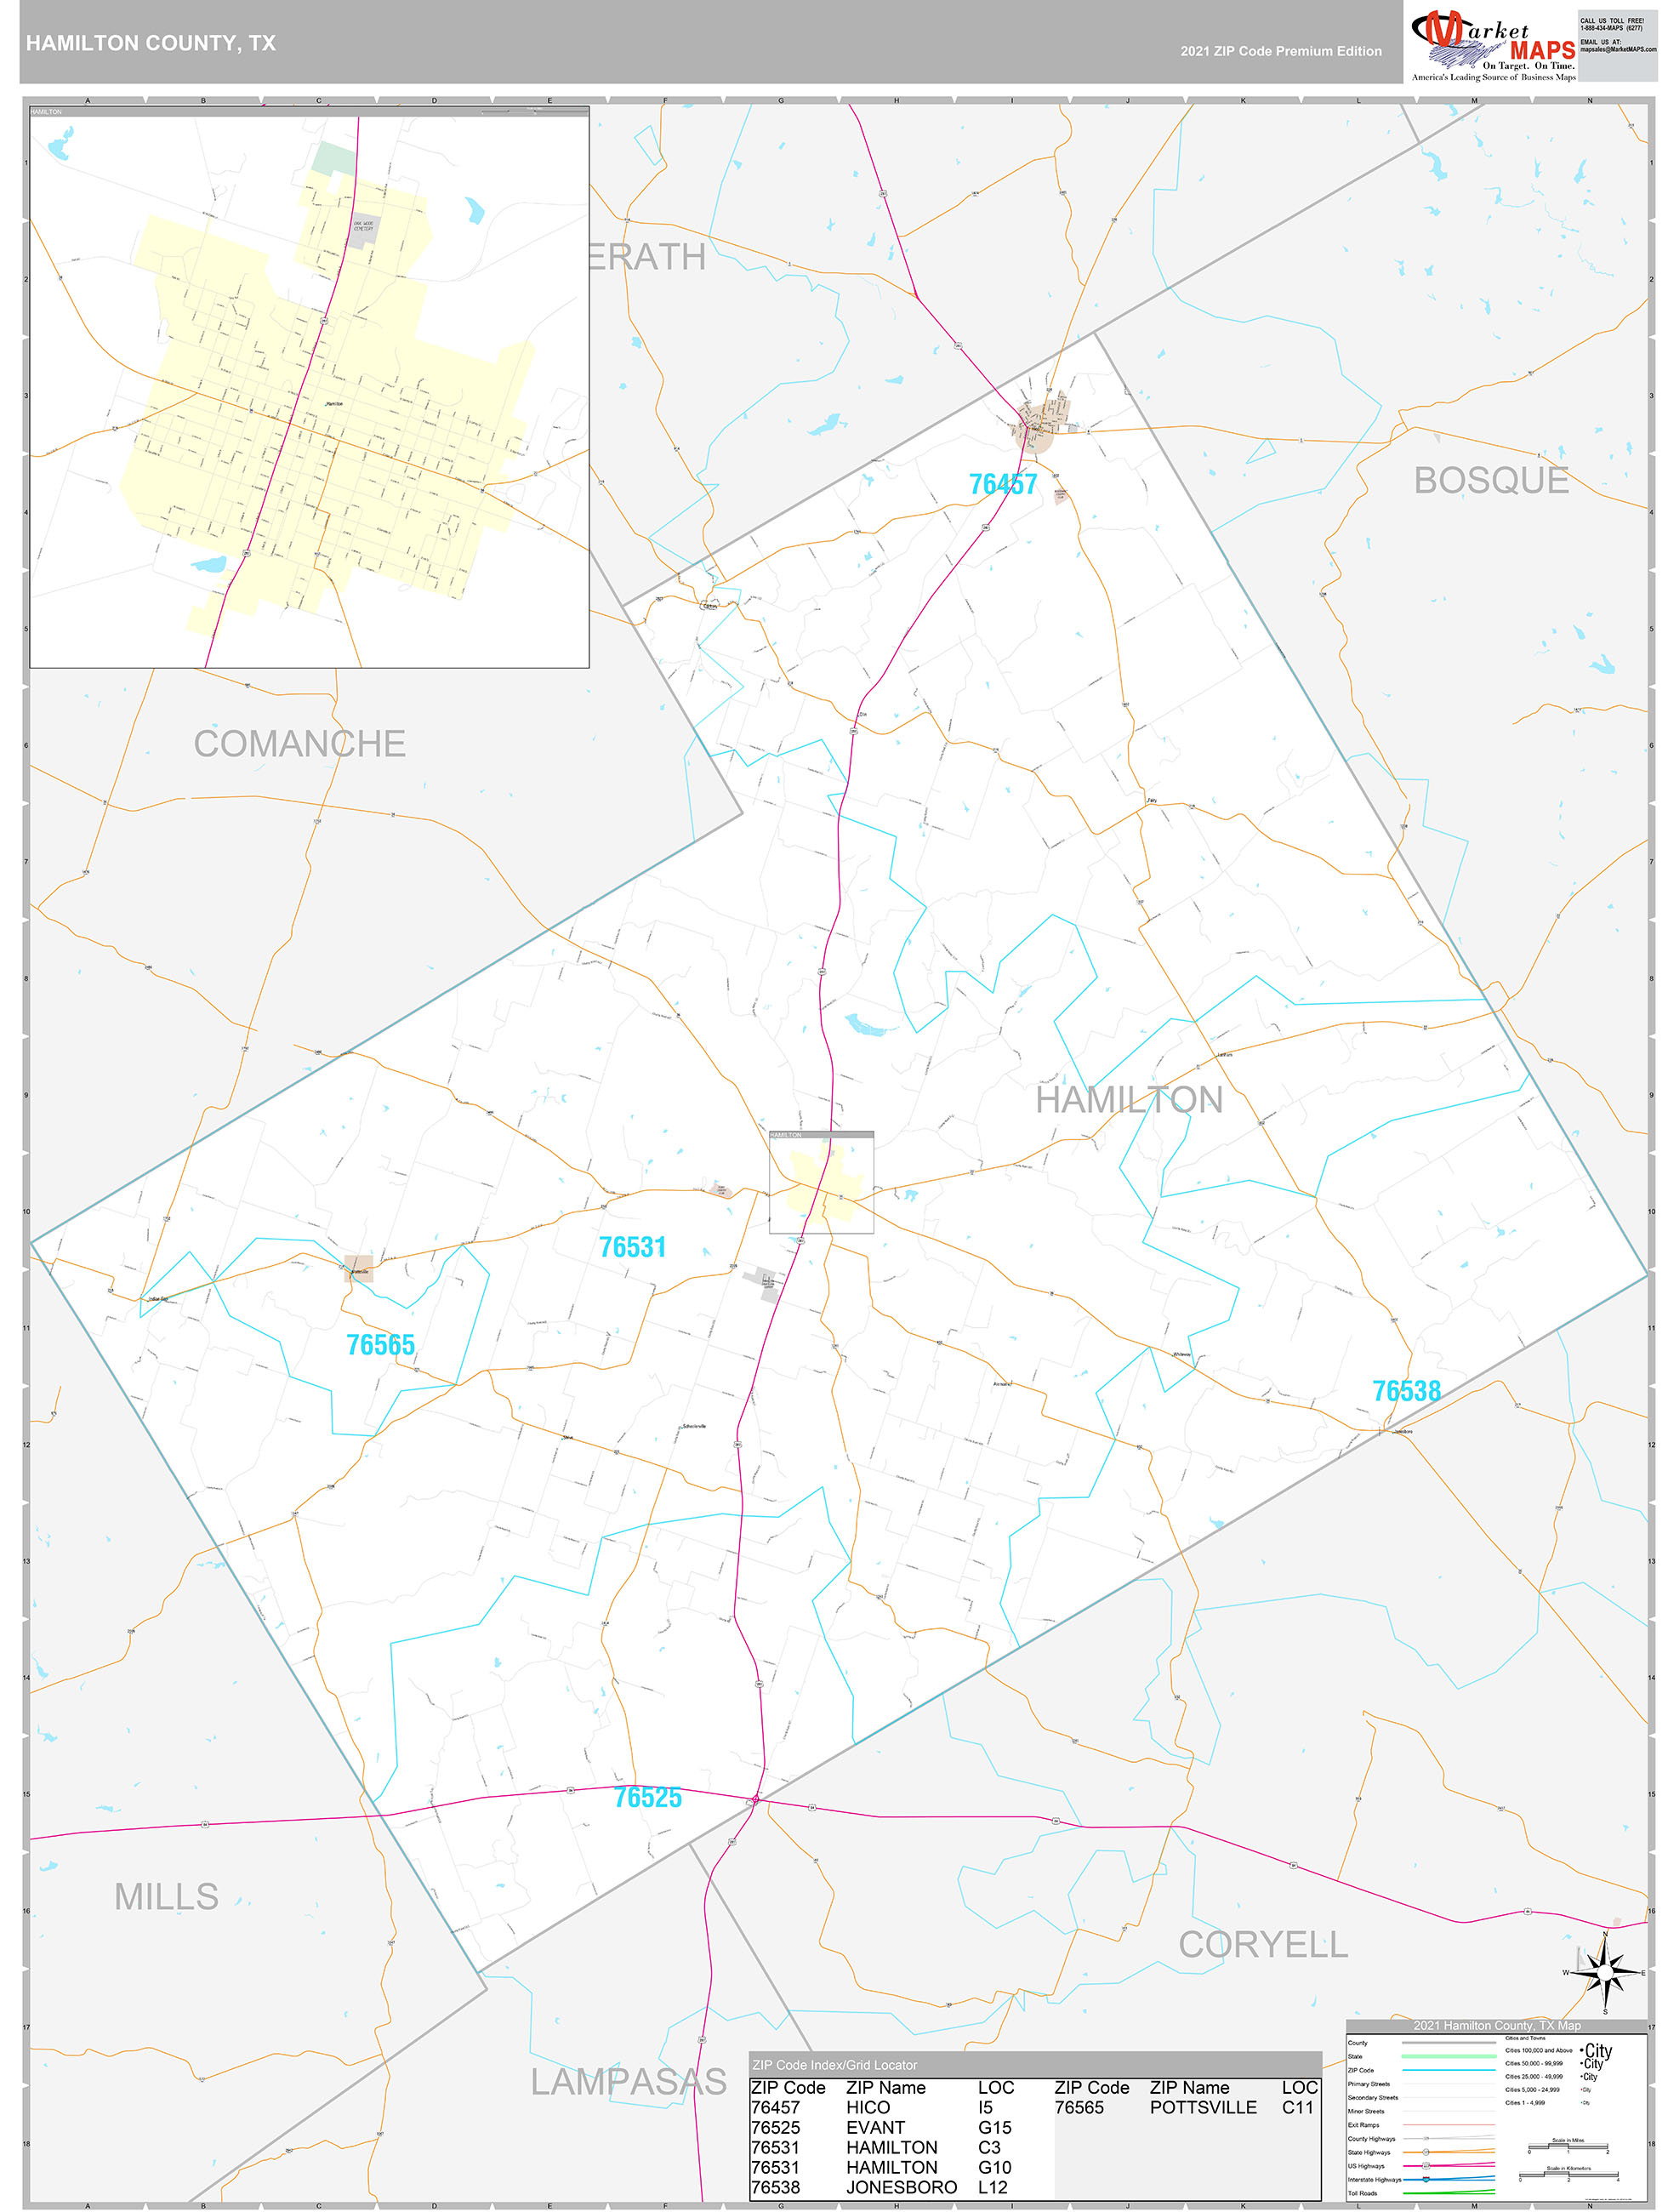 Hamilton County TX Wall Map Premium Style by MarketMAPS